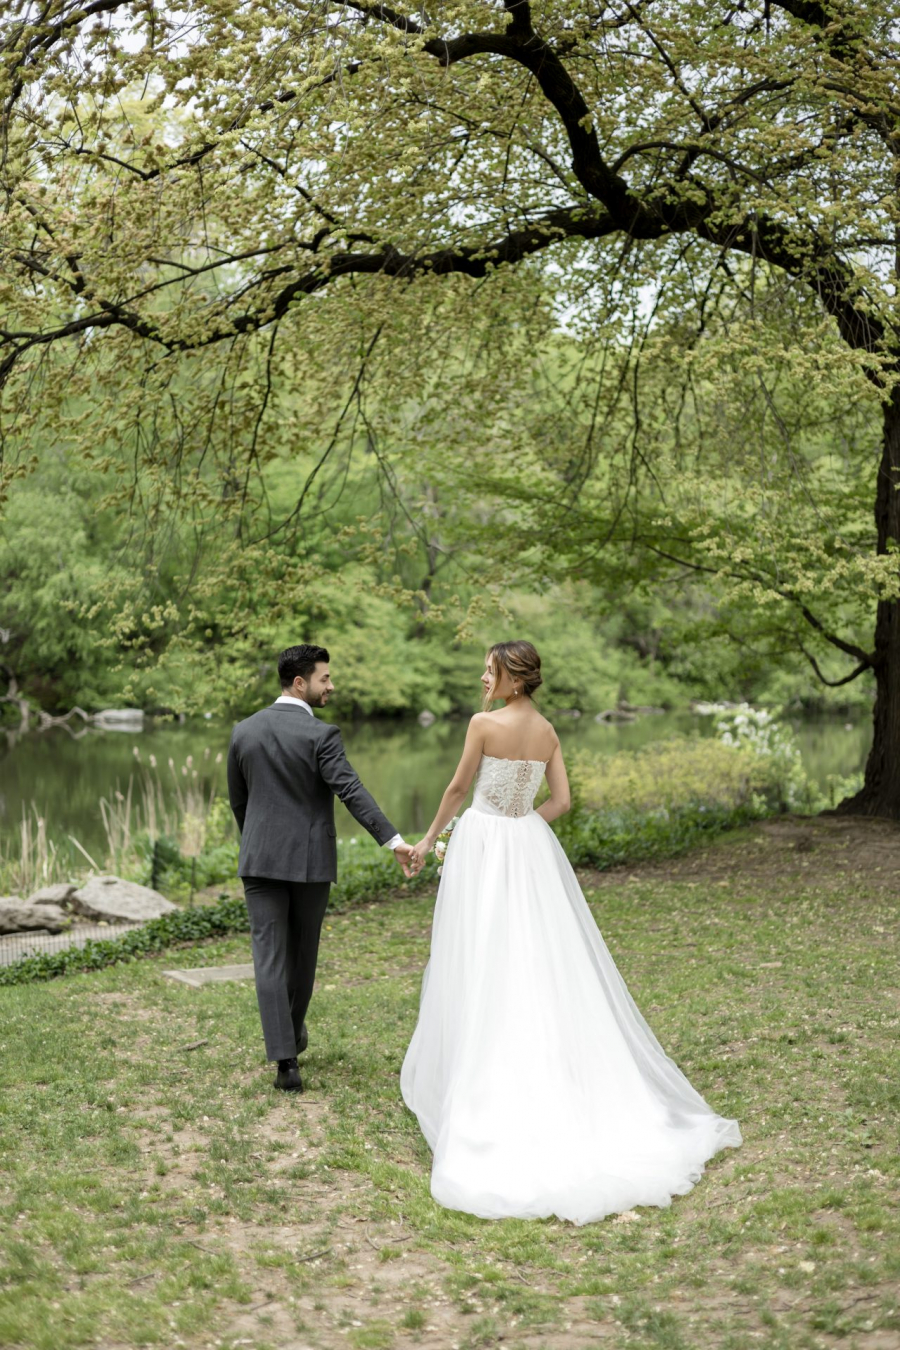 simple wedding central park nyc 5